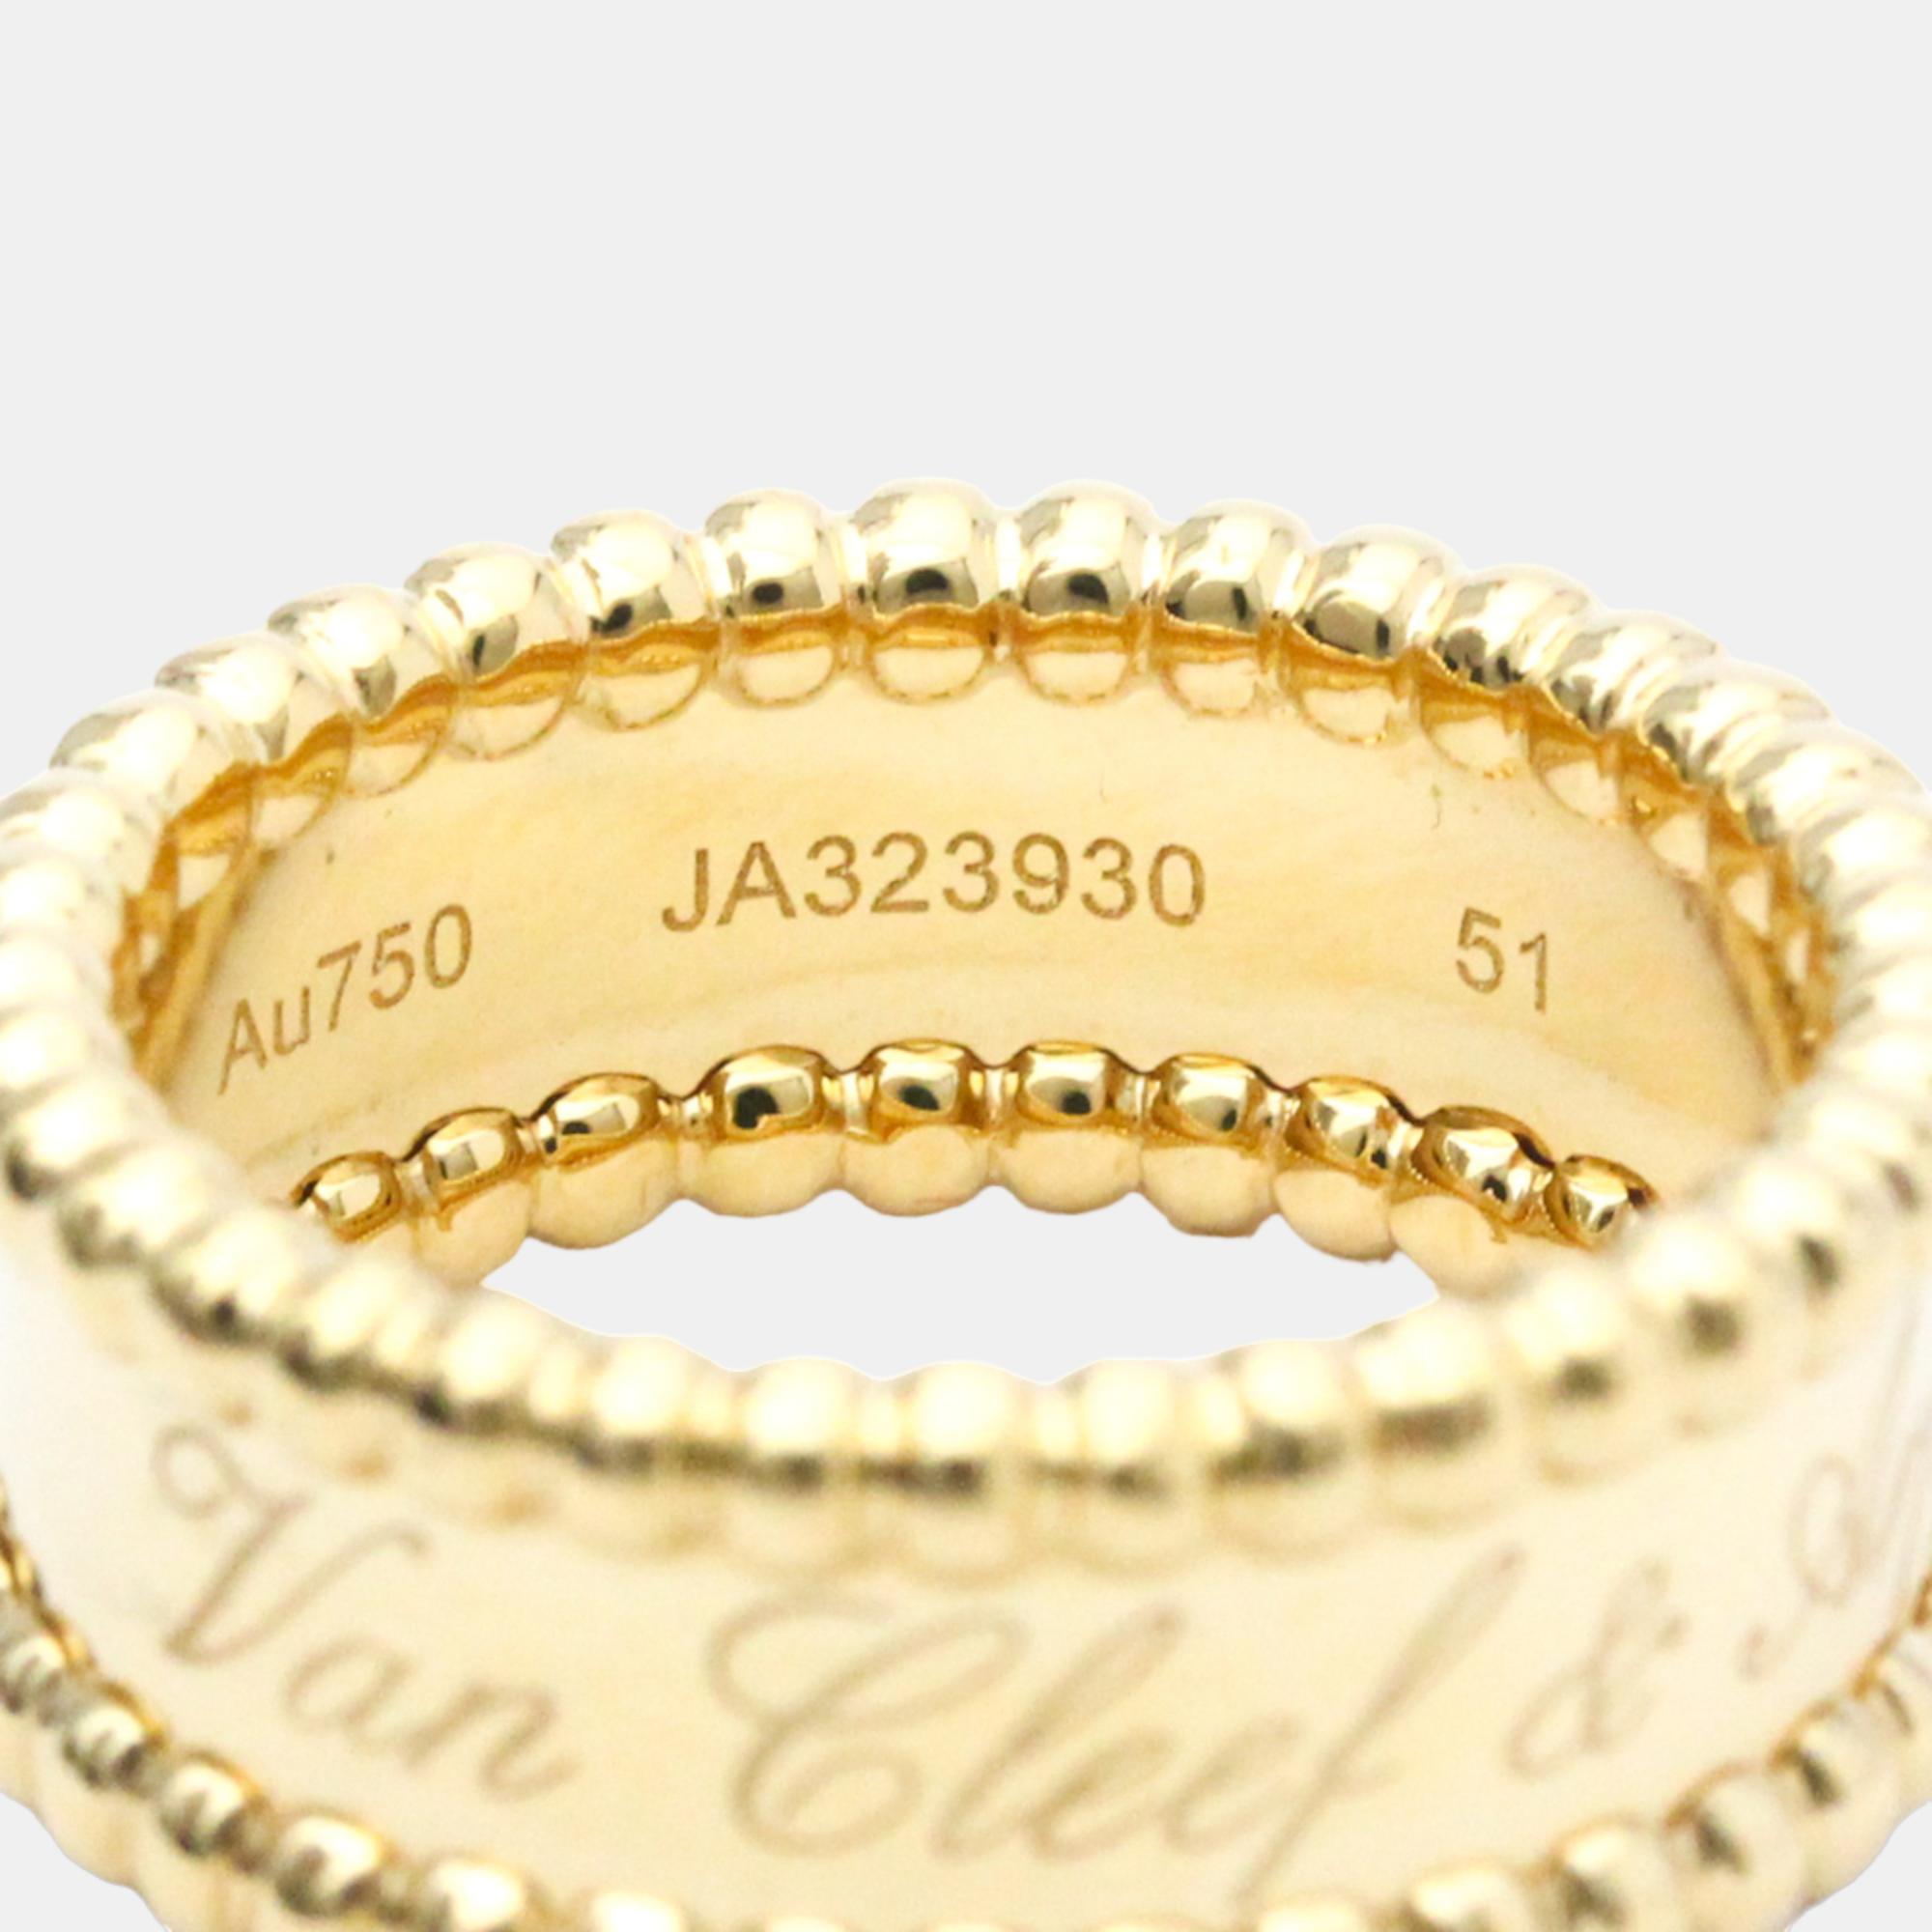 Van Cleef & Arpels Perlée 18K Yellow Gold Ring EU 51